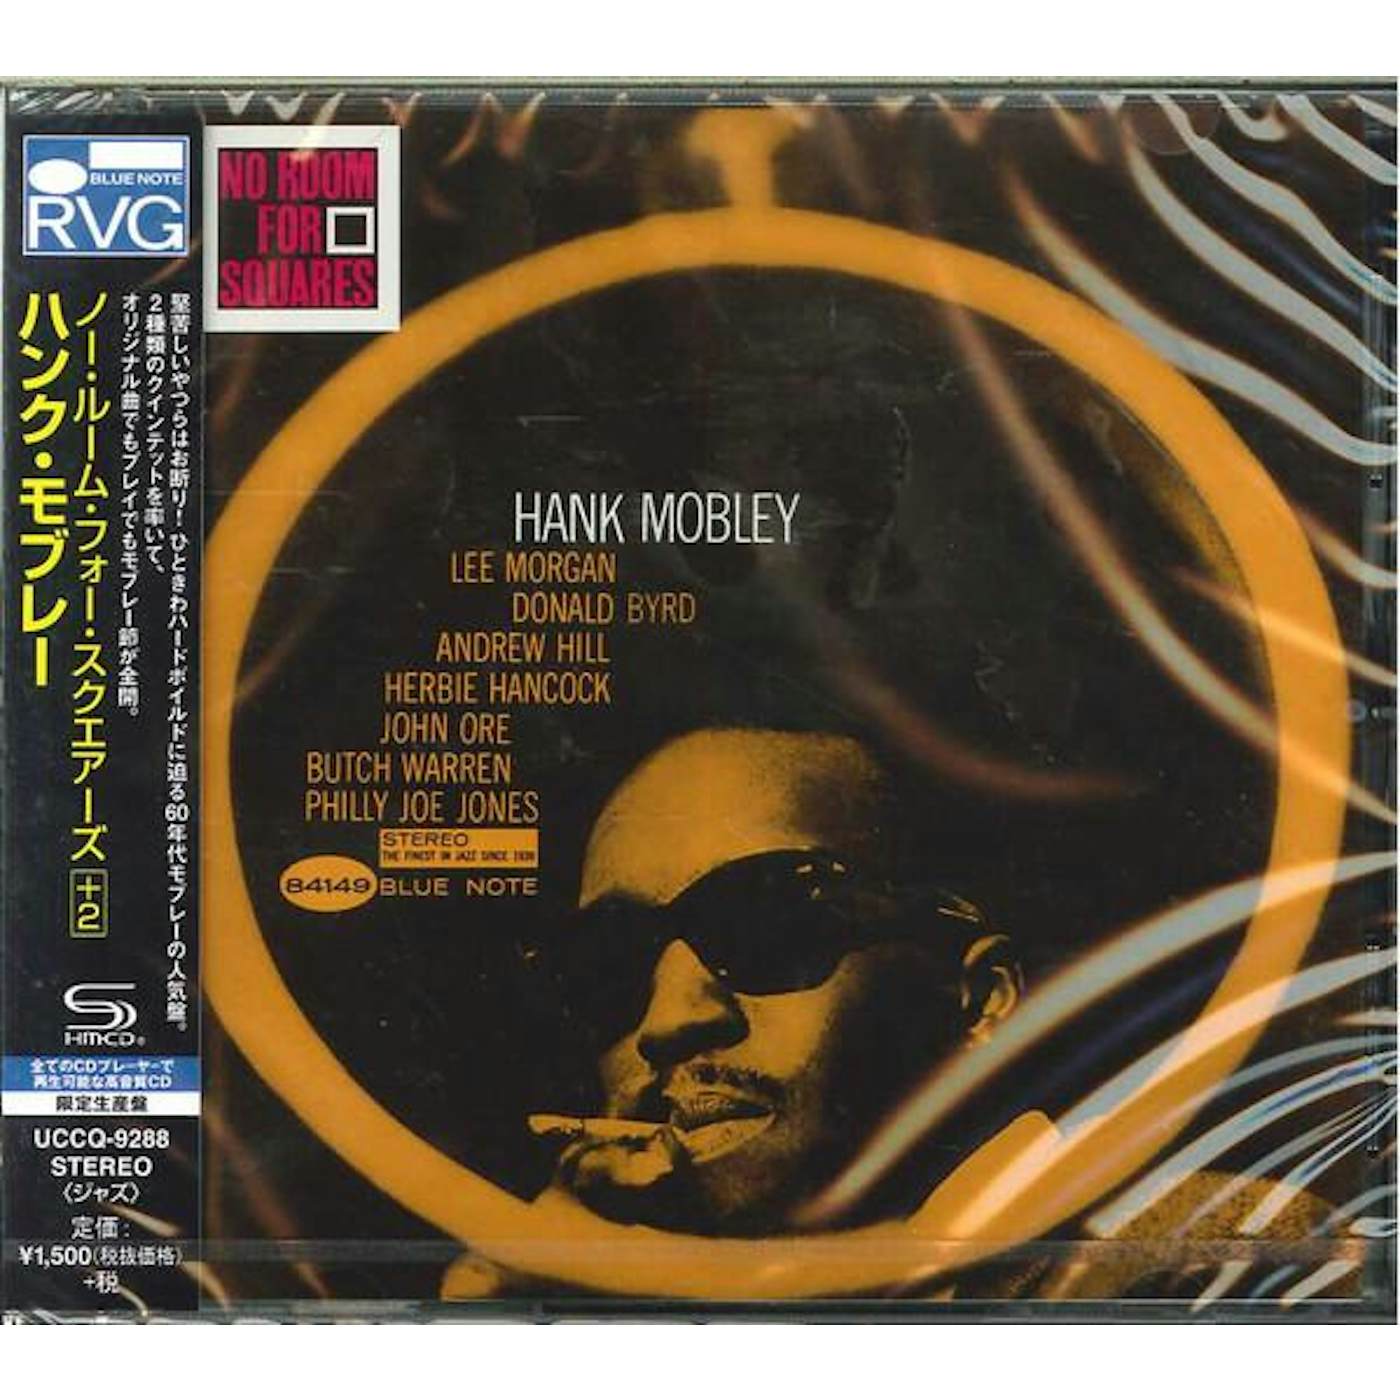 Hank Mobley NO ROOM FOR SQUARES (SHM/BONUS TRACK/REMASTERED/REISSUE) CD